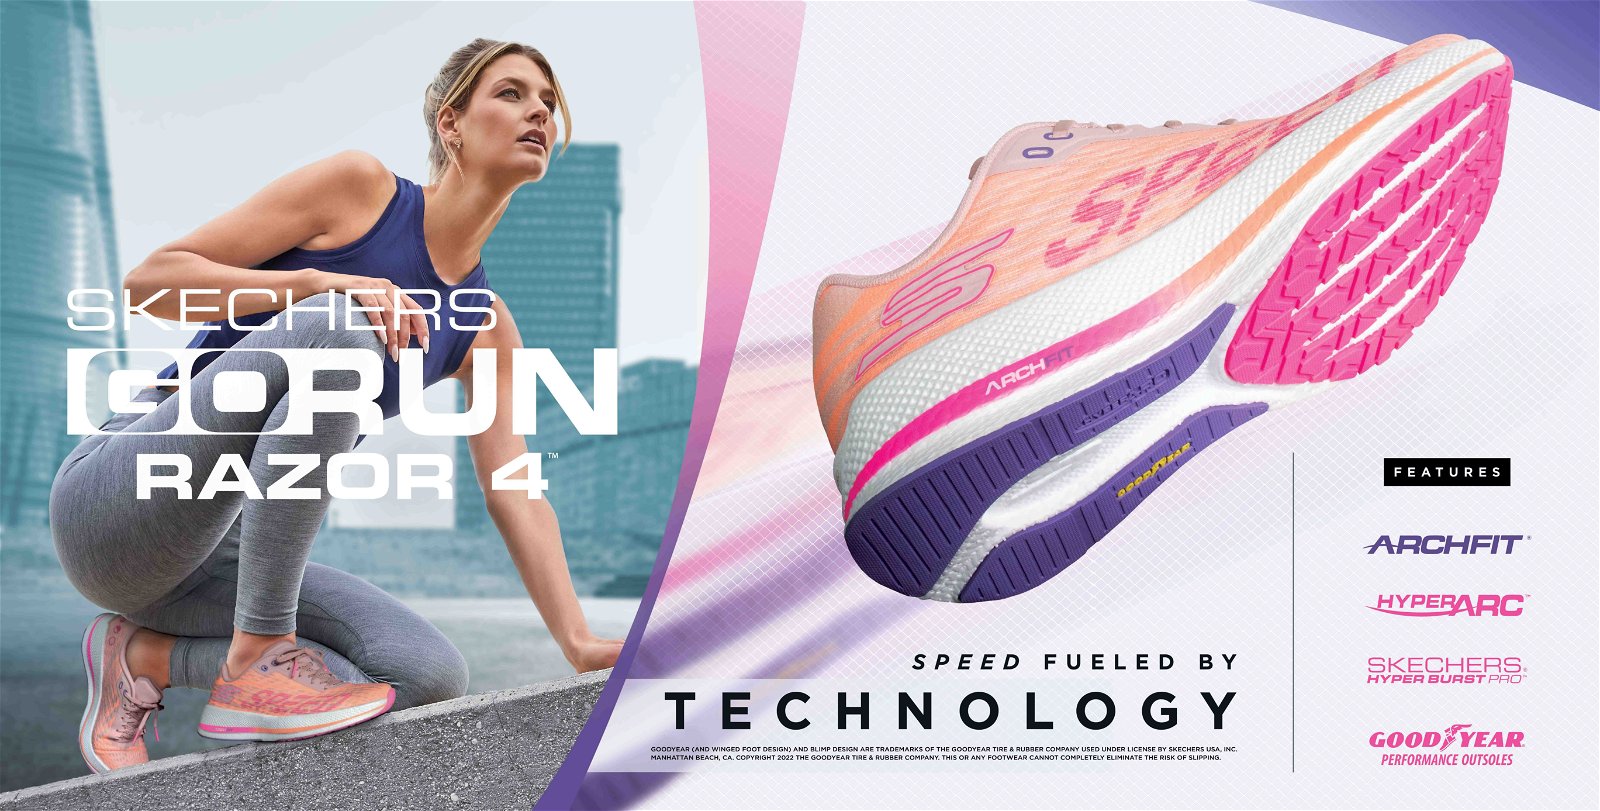 Tênis Skechers GO Run Speed Beast - Feminino em Promoção